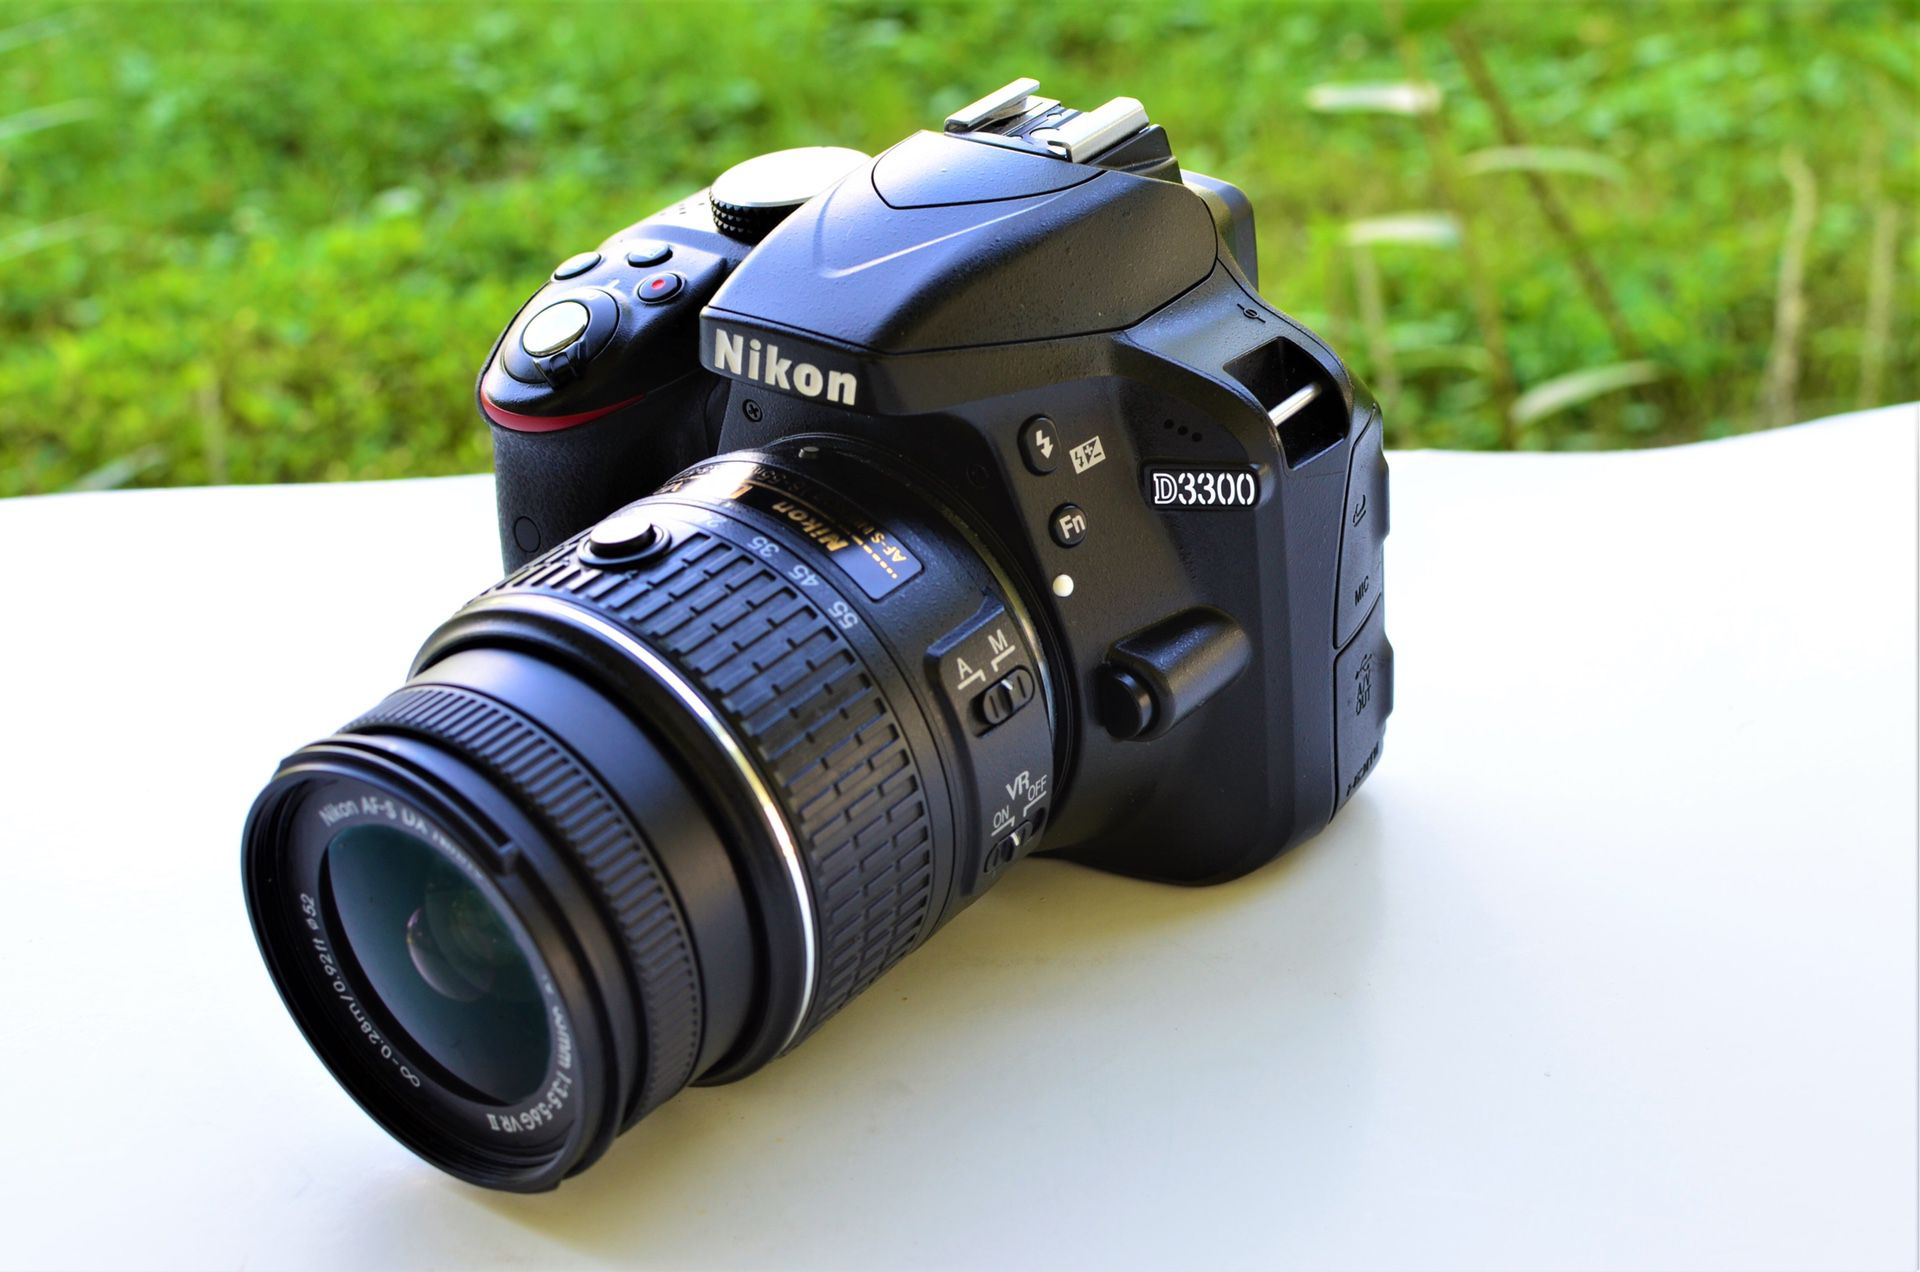 Nikon D3300 DSLR Camera With Accessories